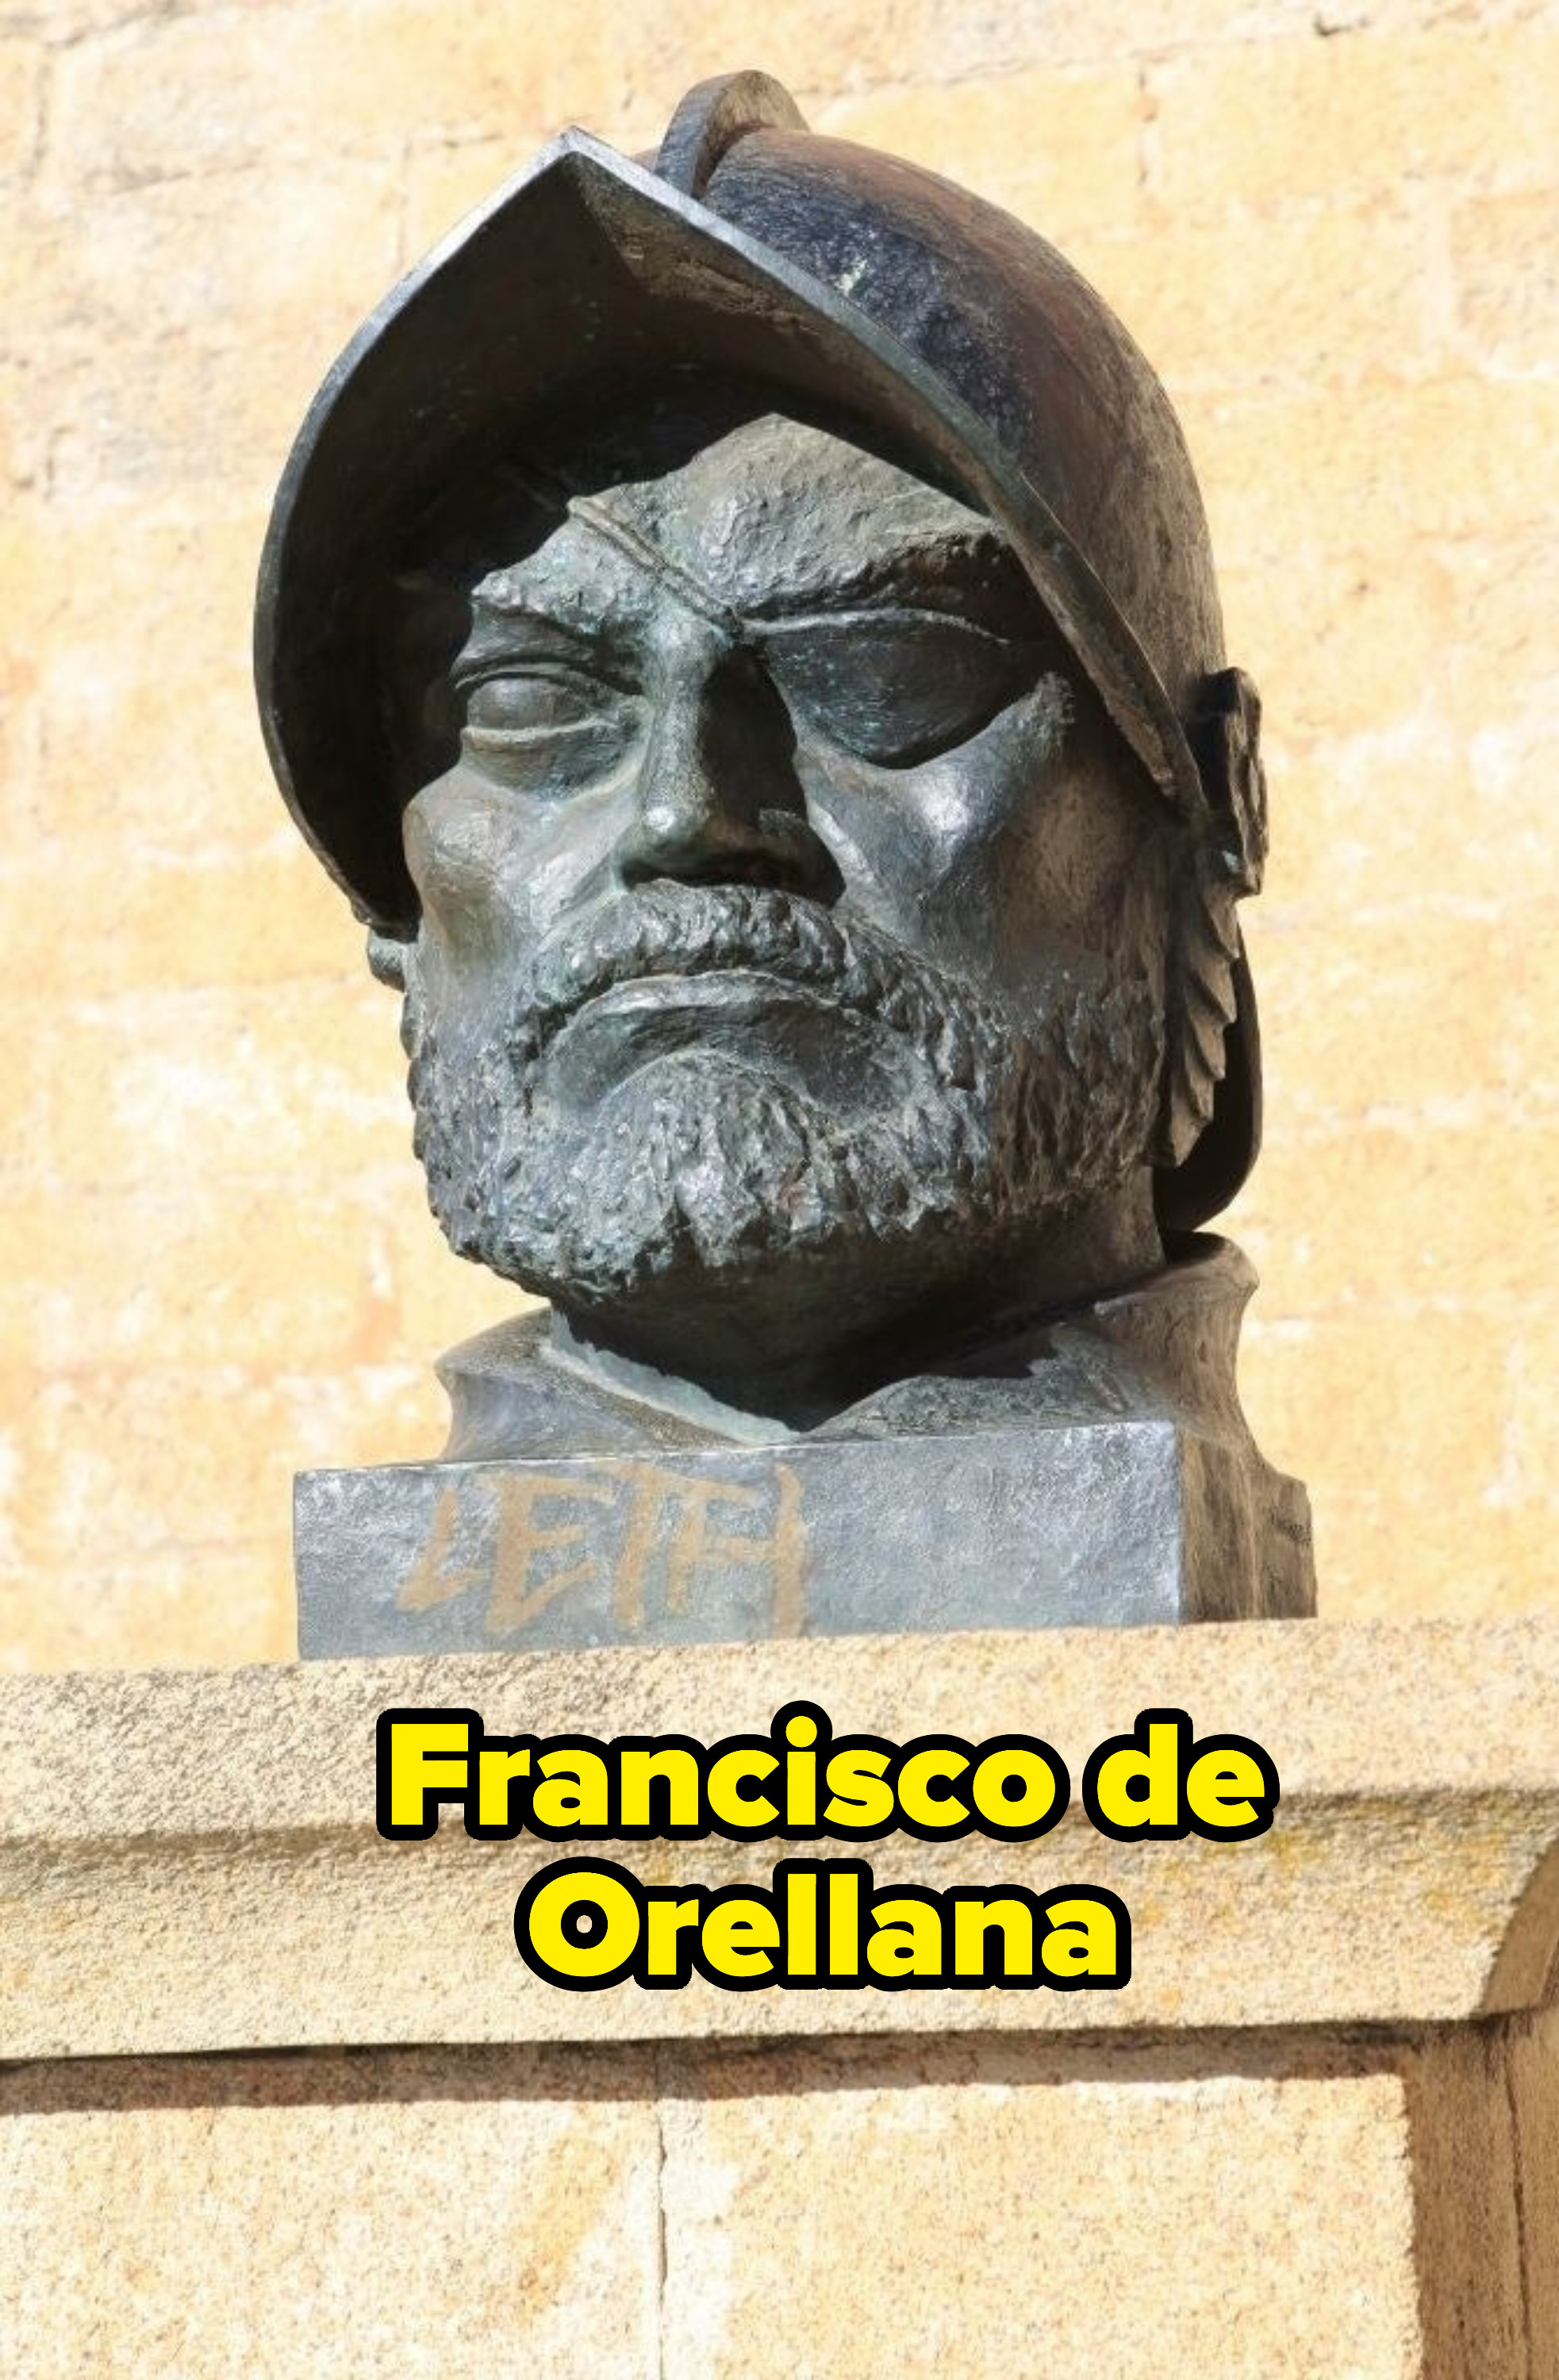 A bust of Francisco de Orellana